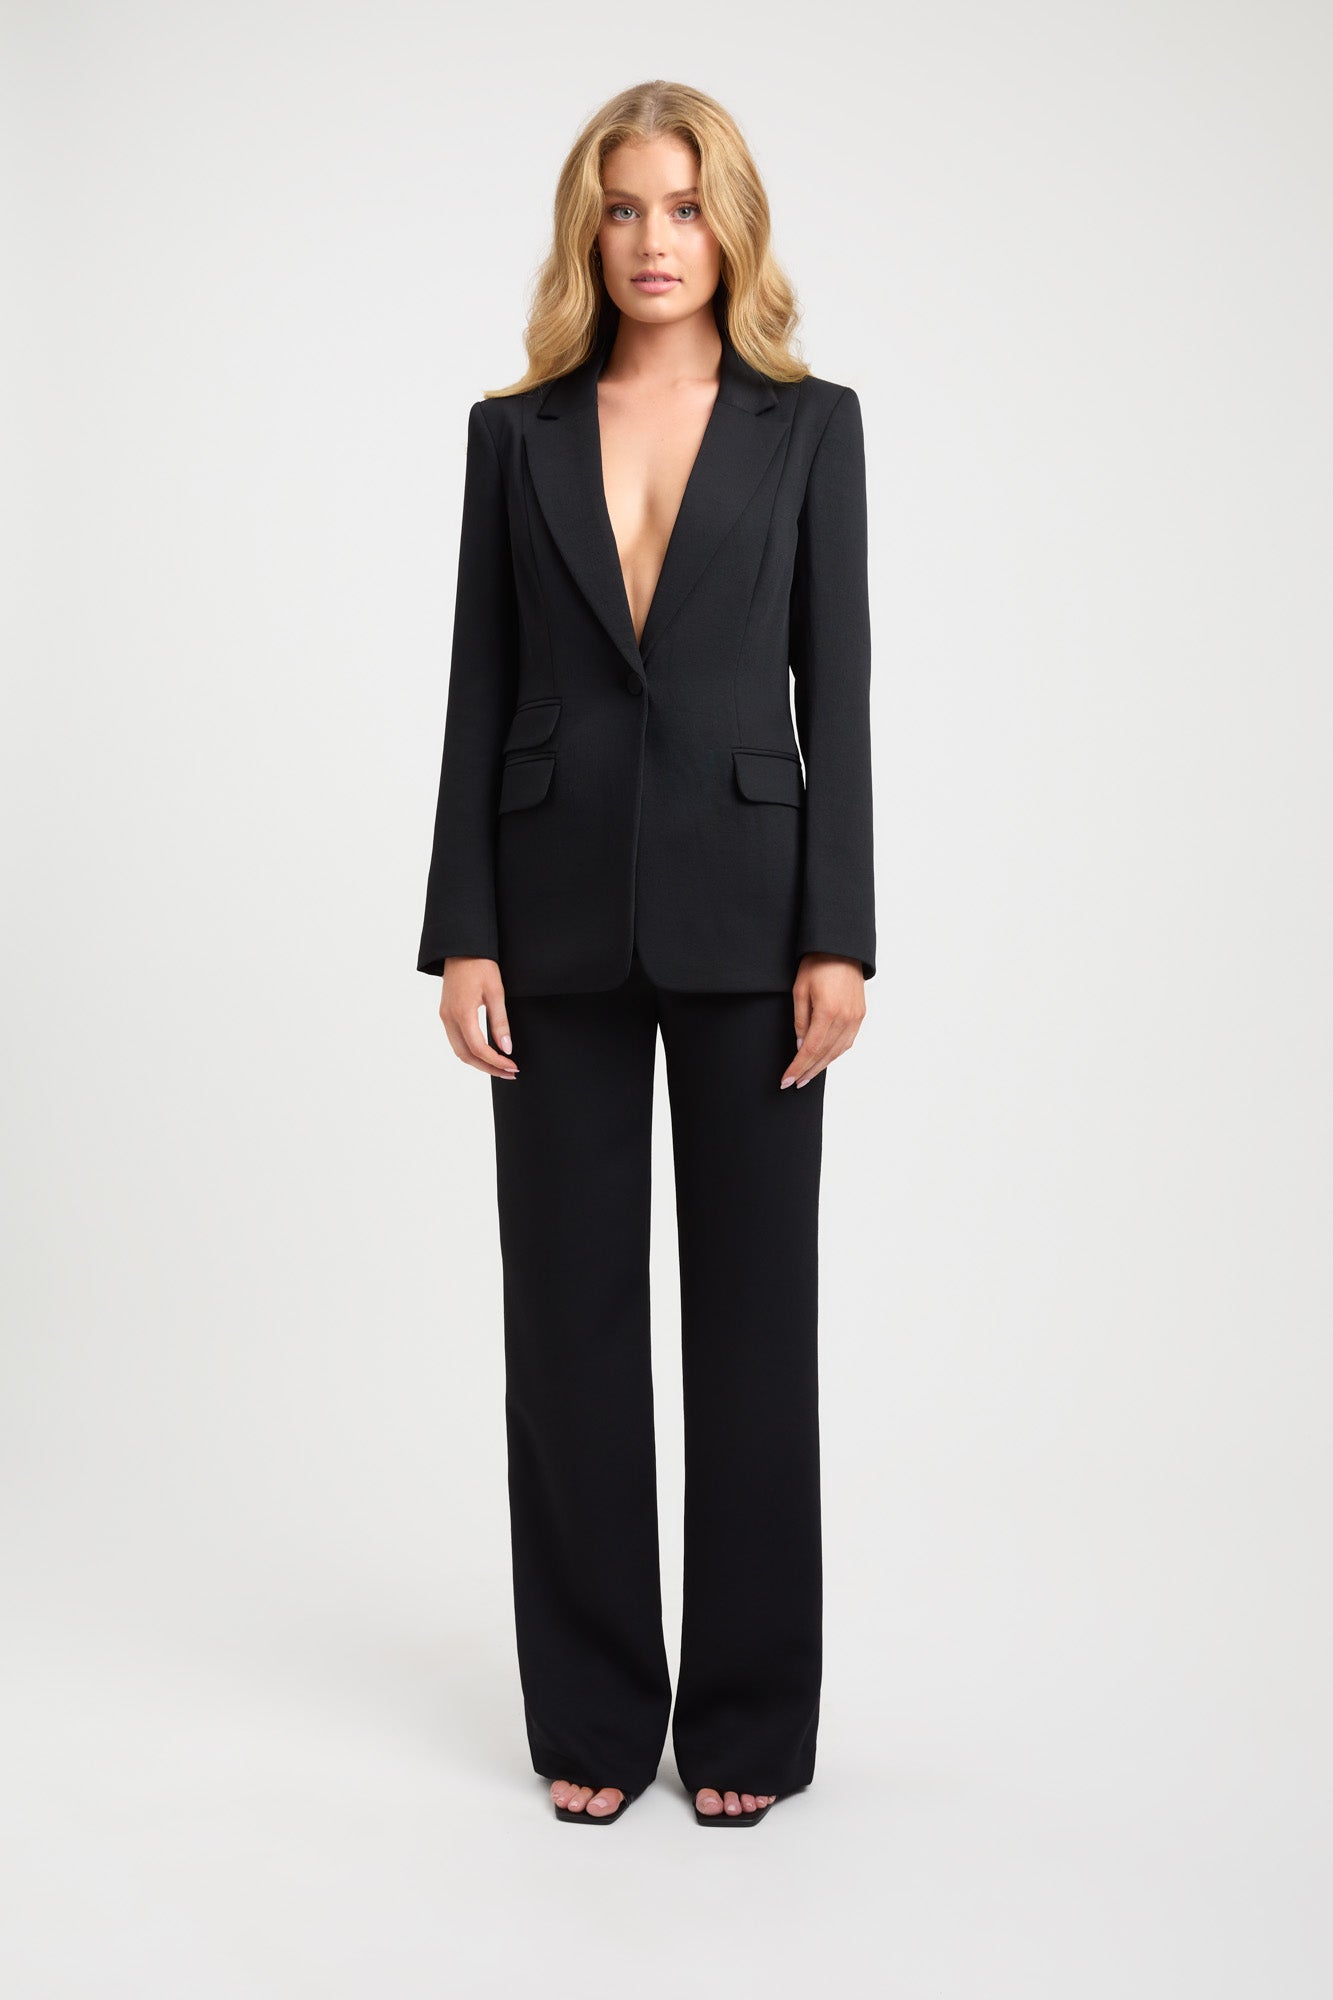 Discover 169+ blazer vs suit latest